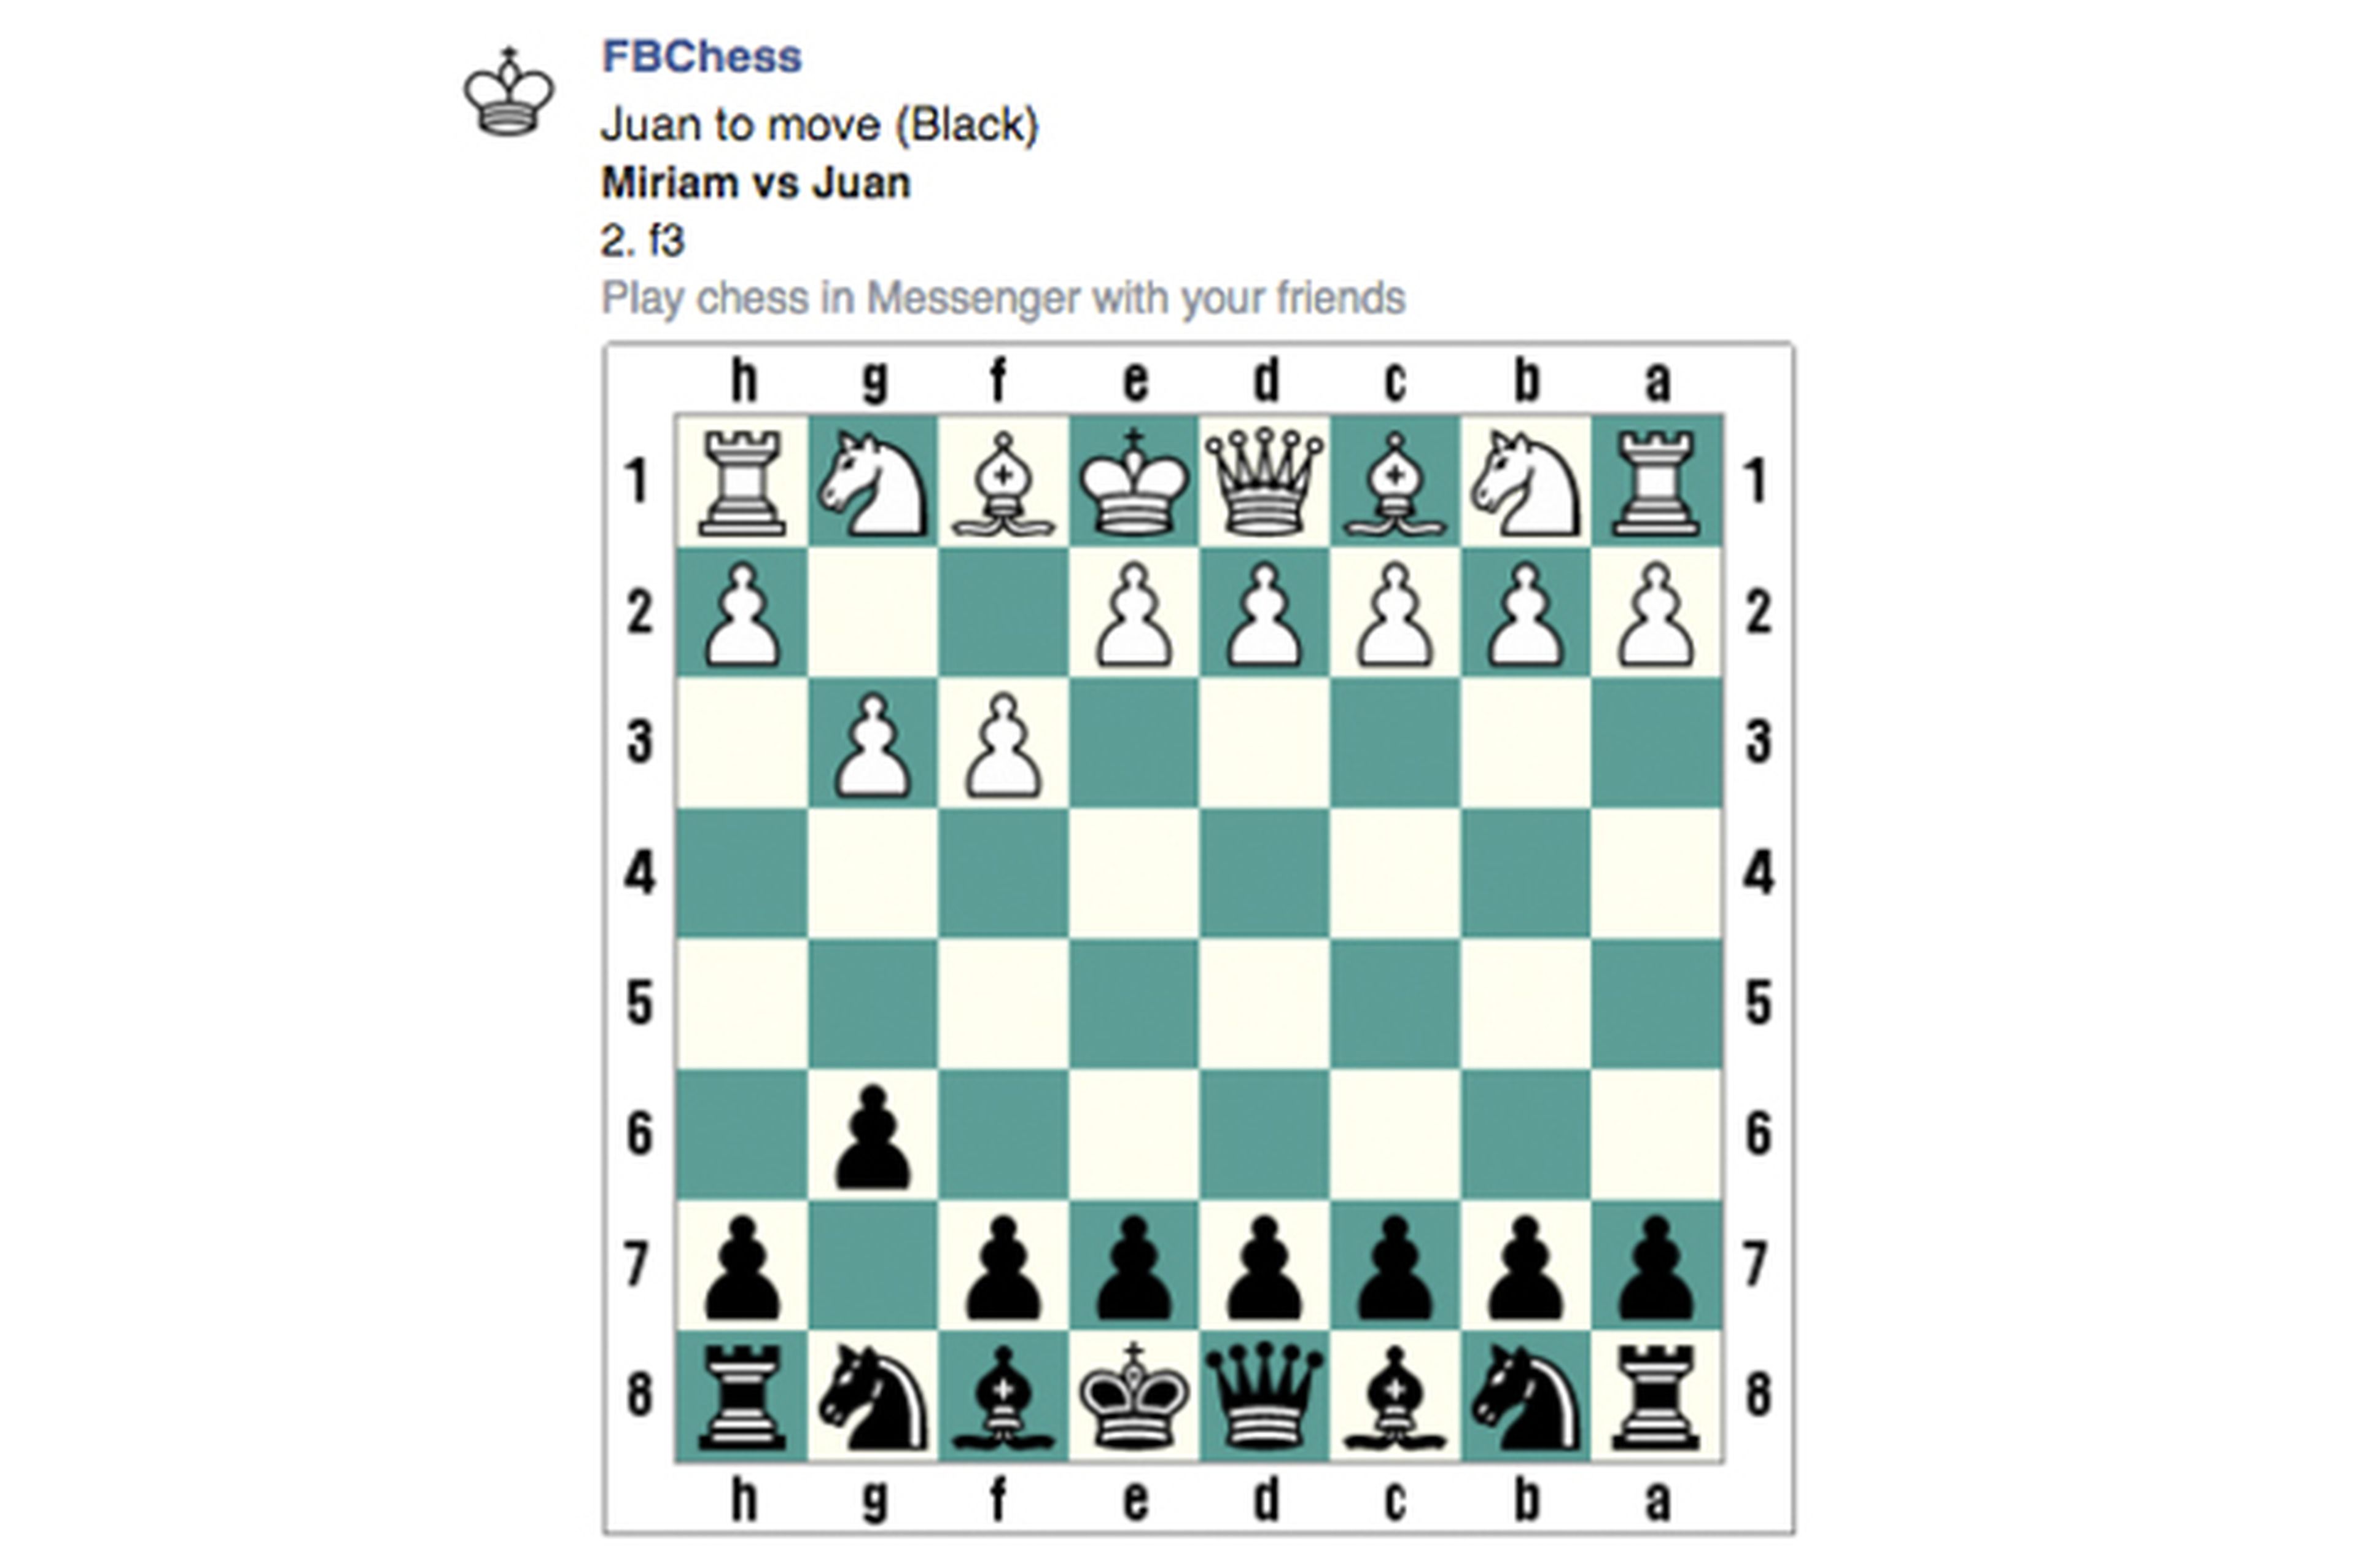 Juedo de ajedrez secreto de facebook